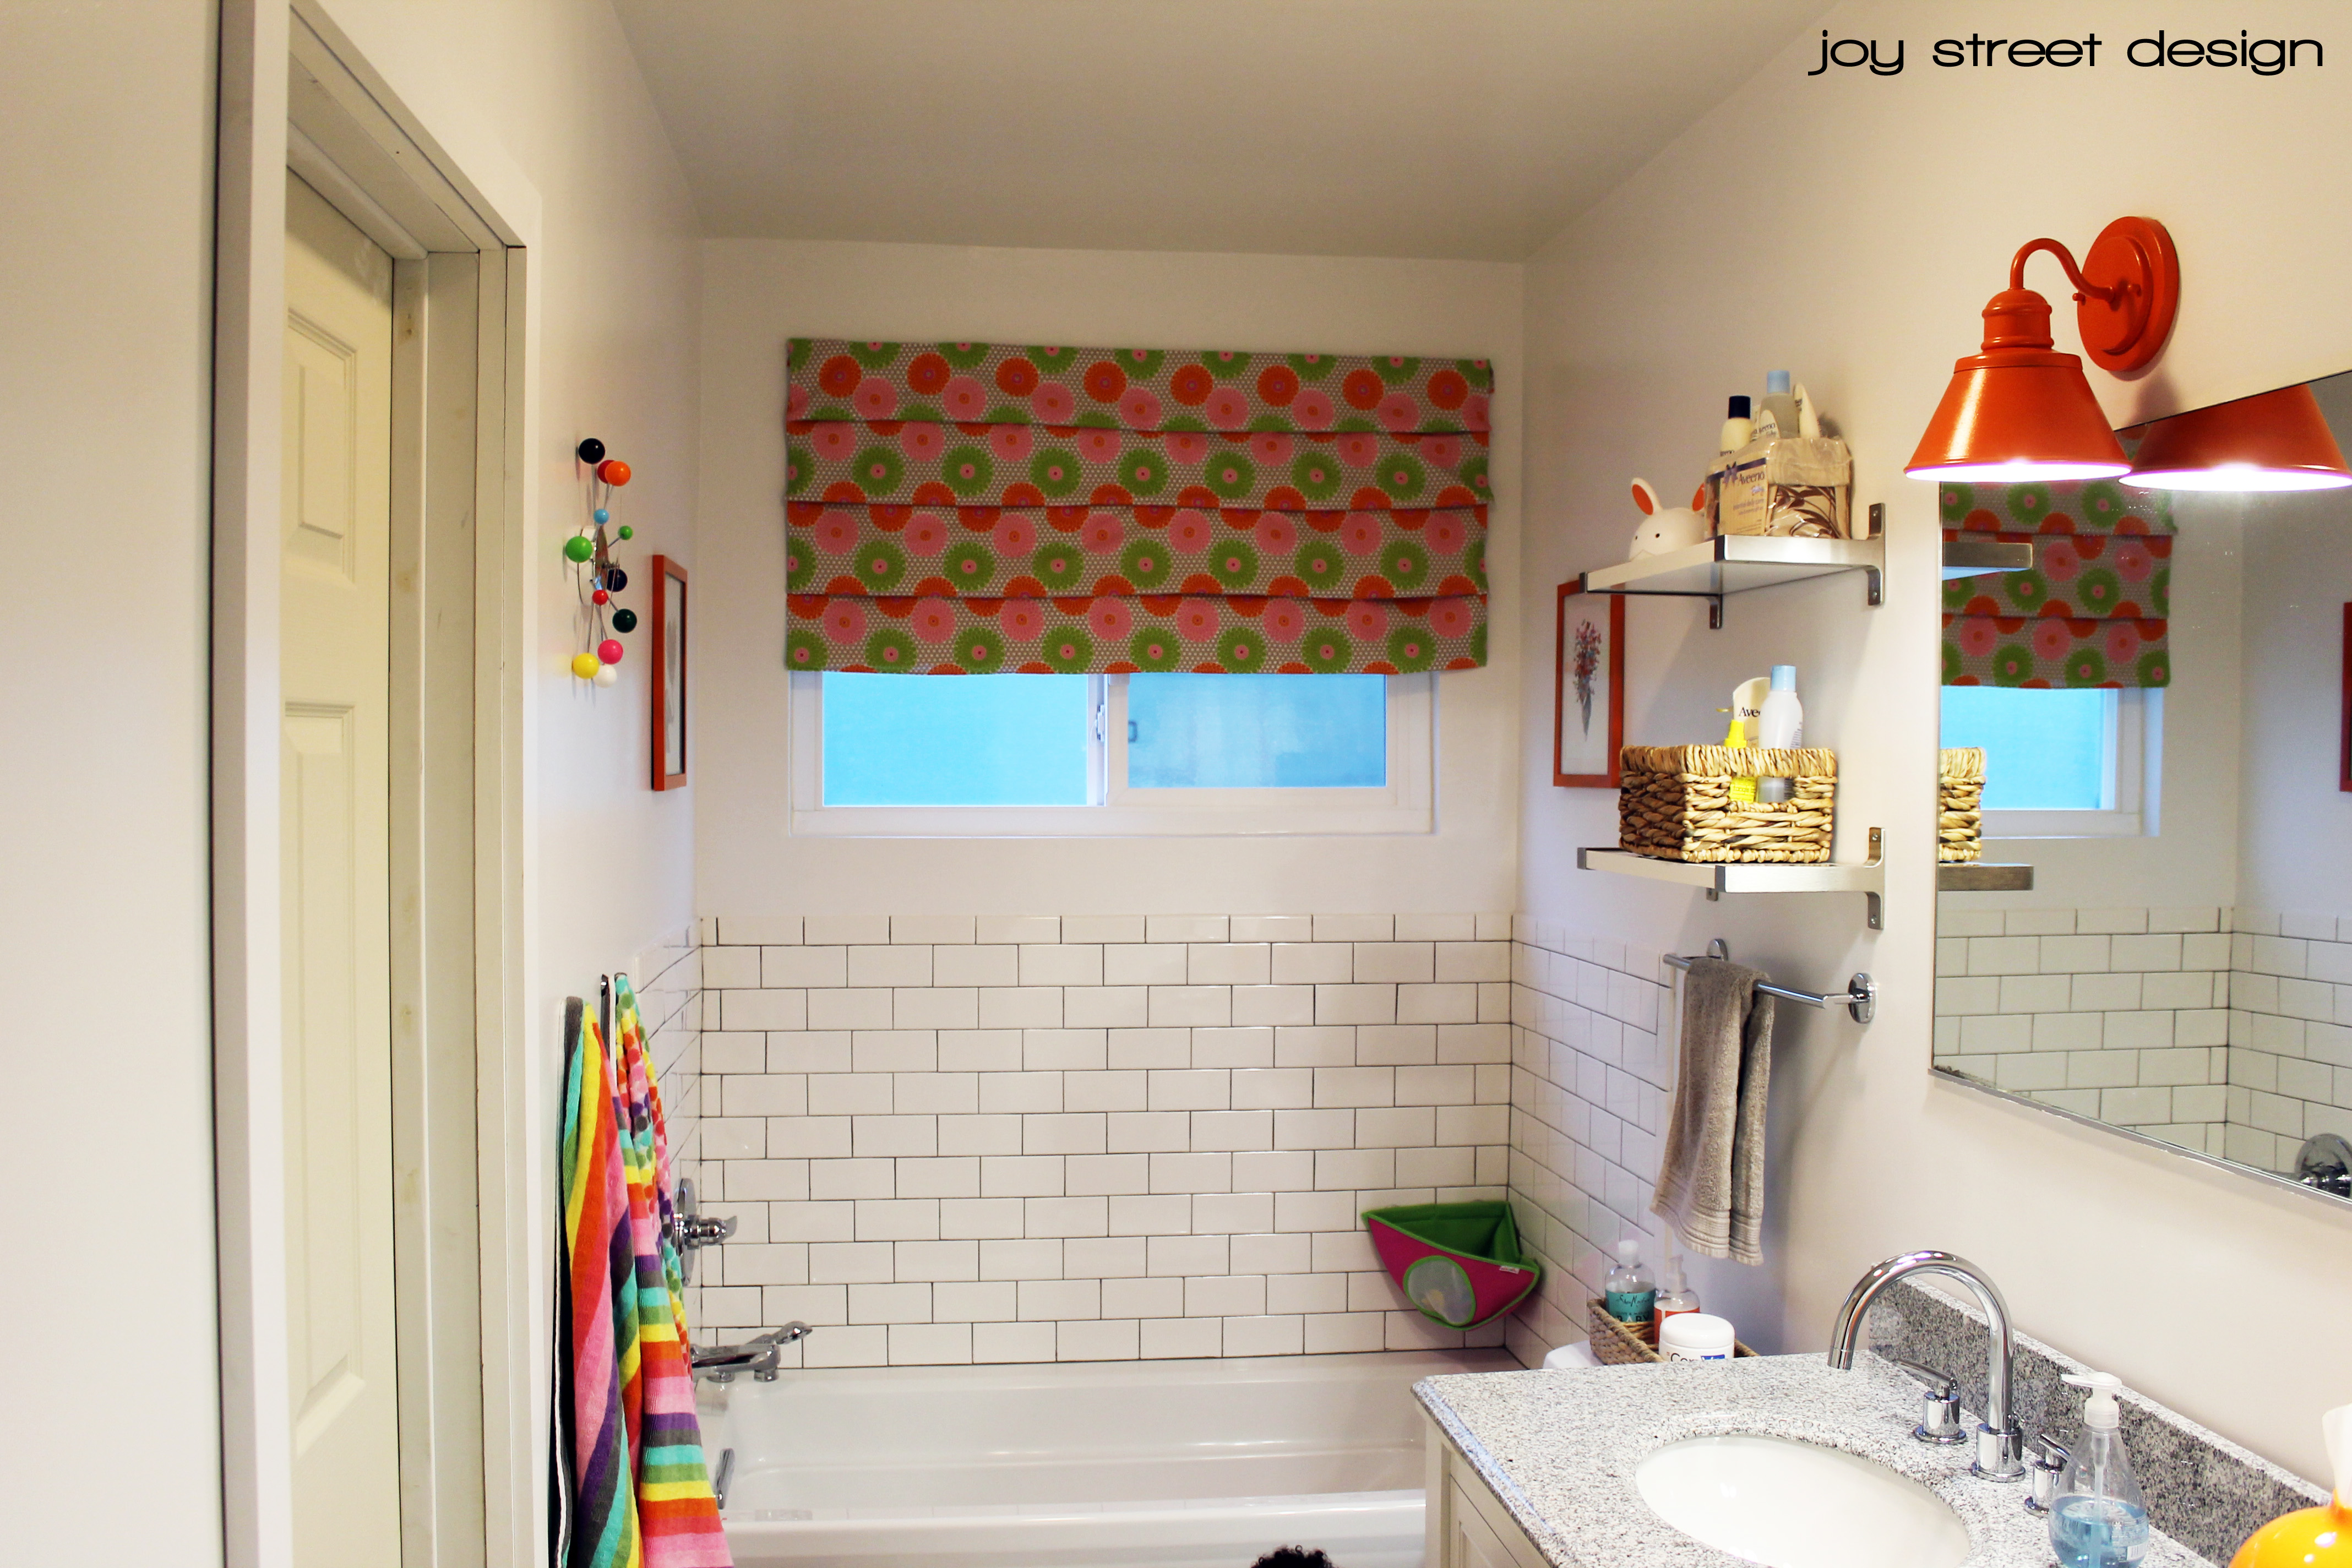 Bathroom Renovation - Joy Street Design - www.joystreetdesign.com